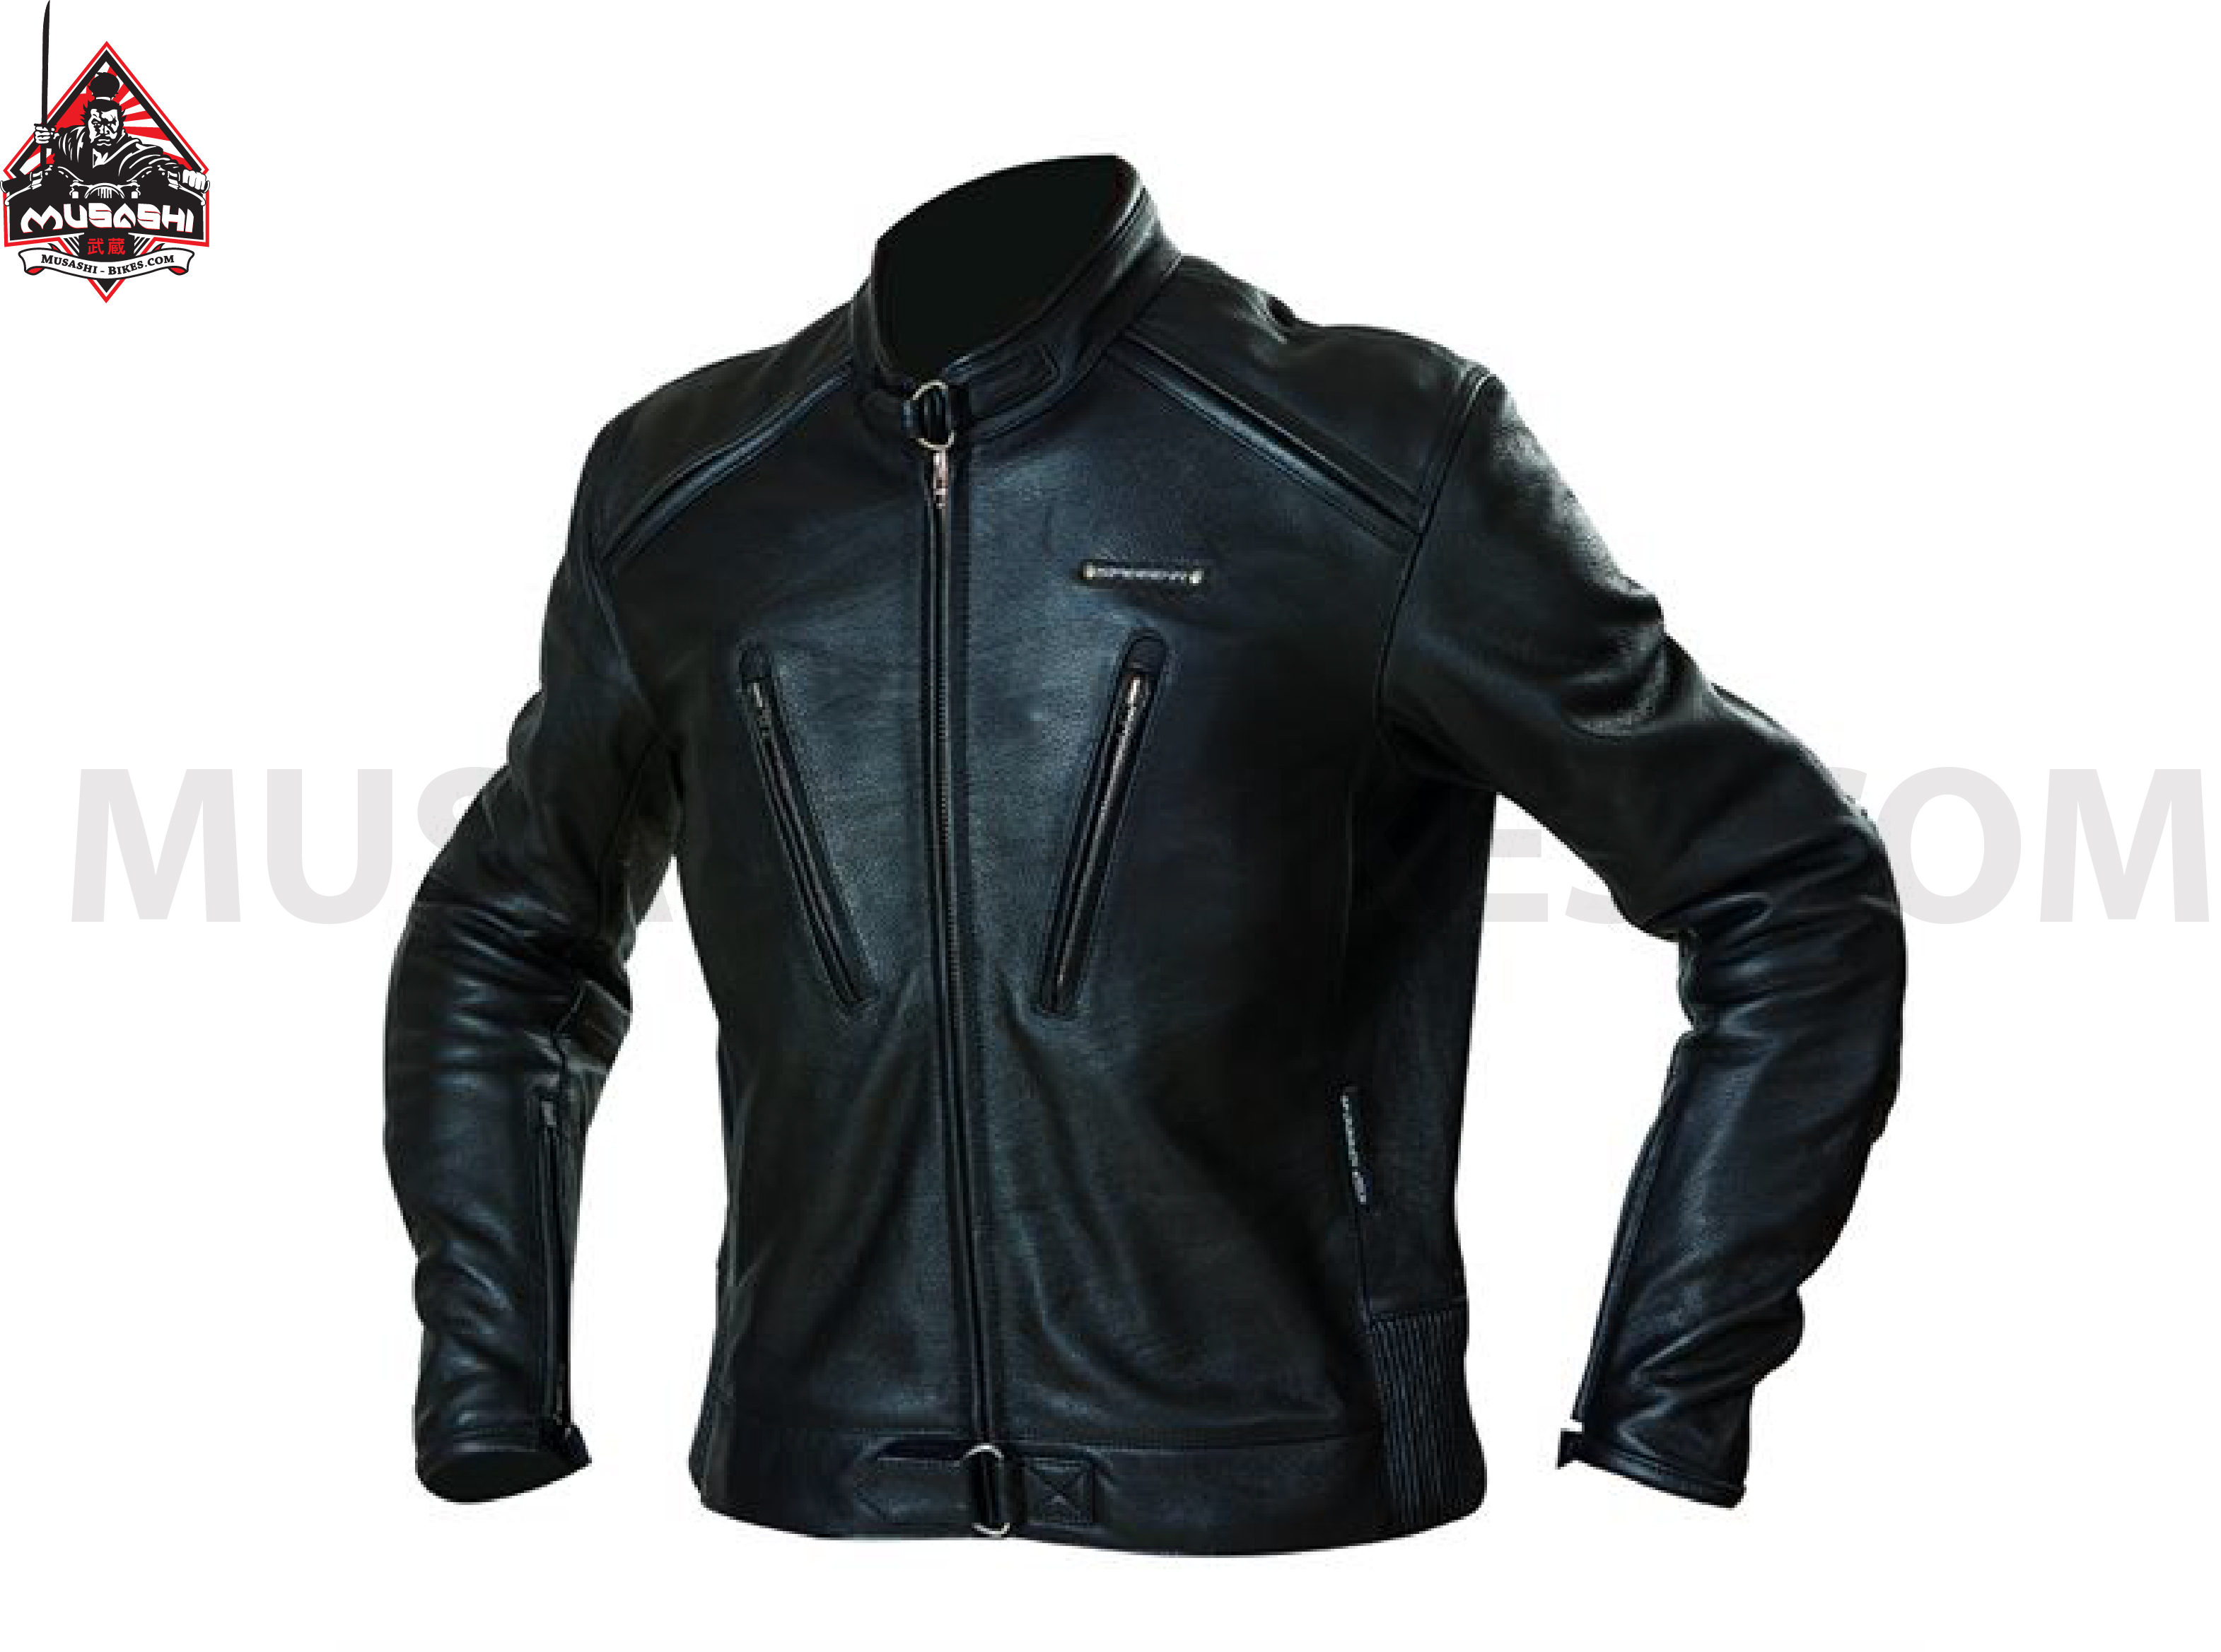 Men's Retro Leather Jacket FM88